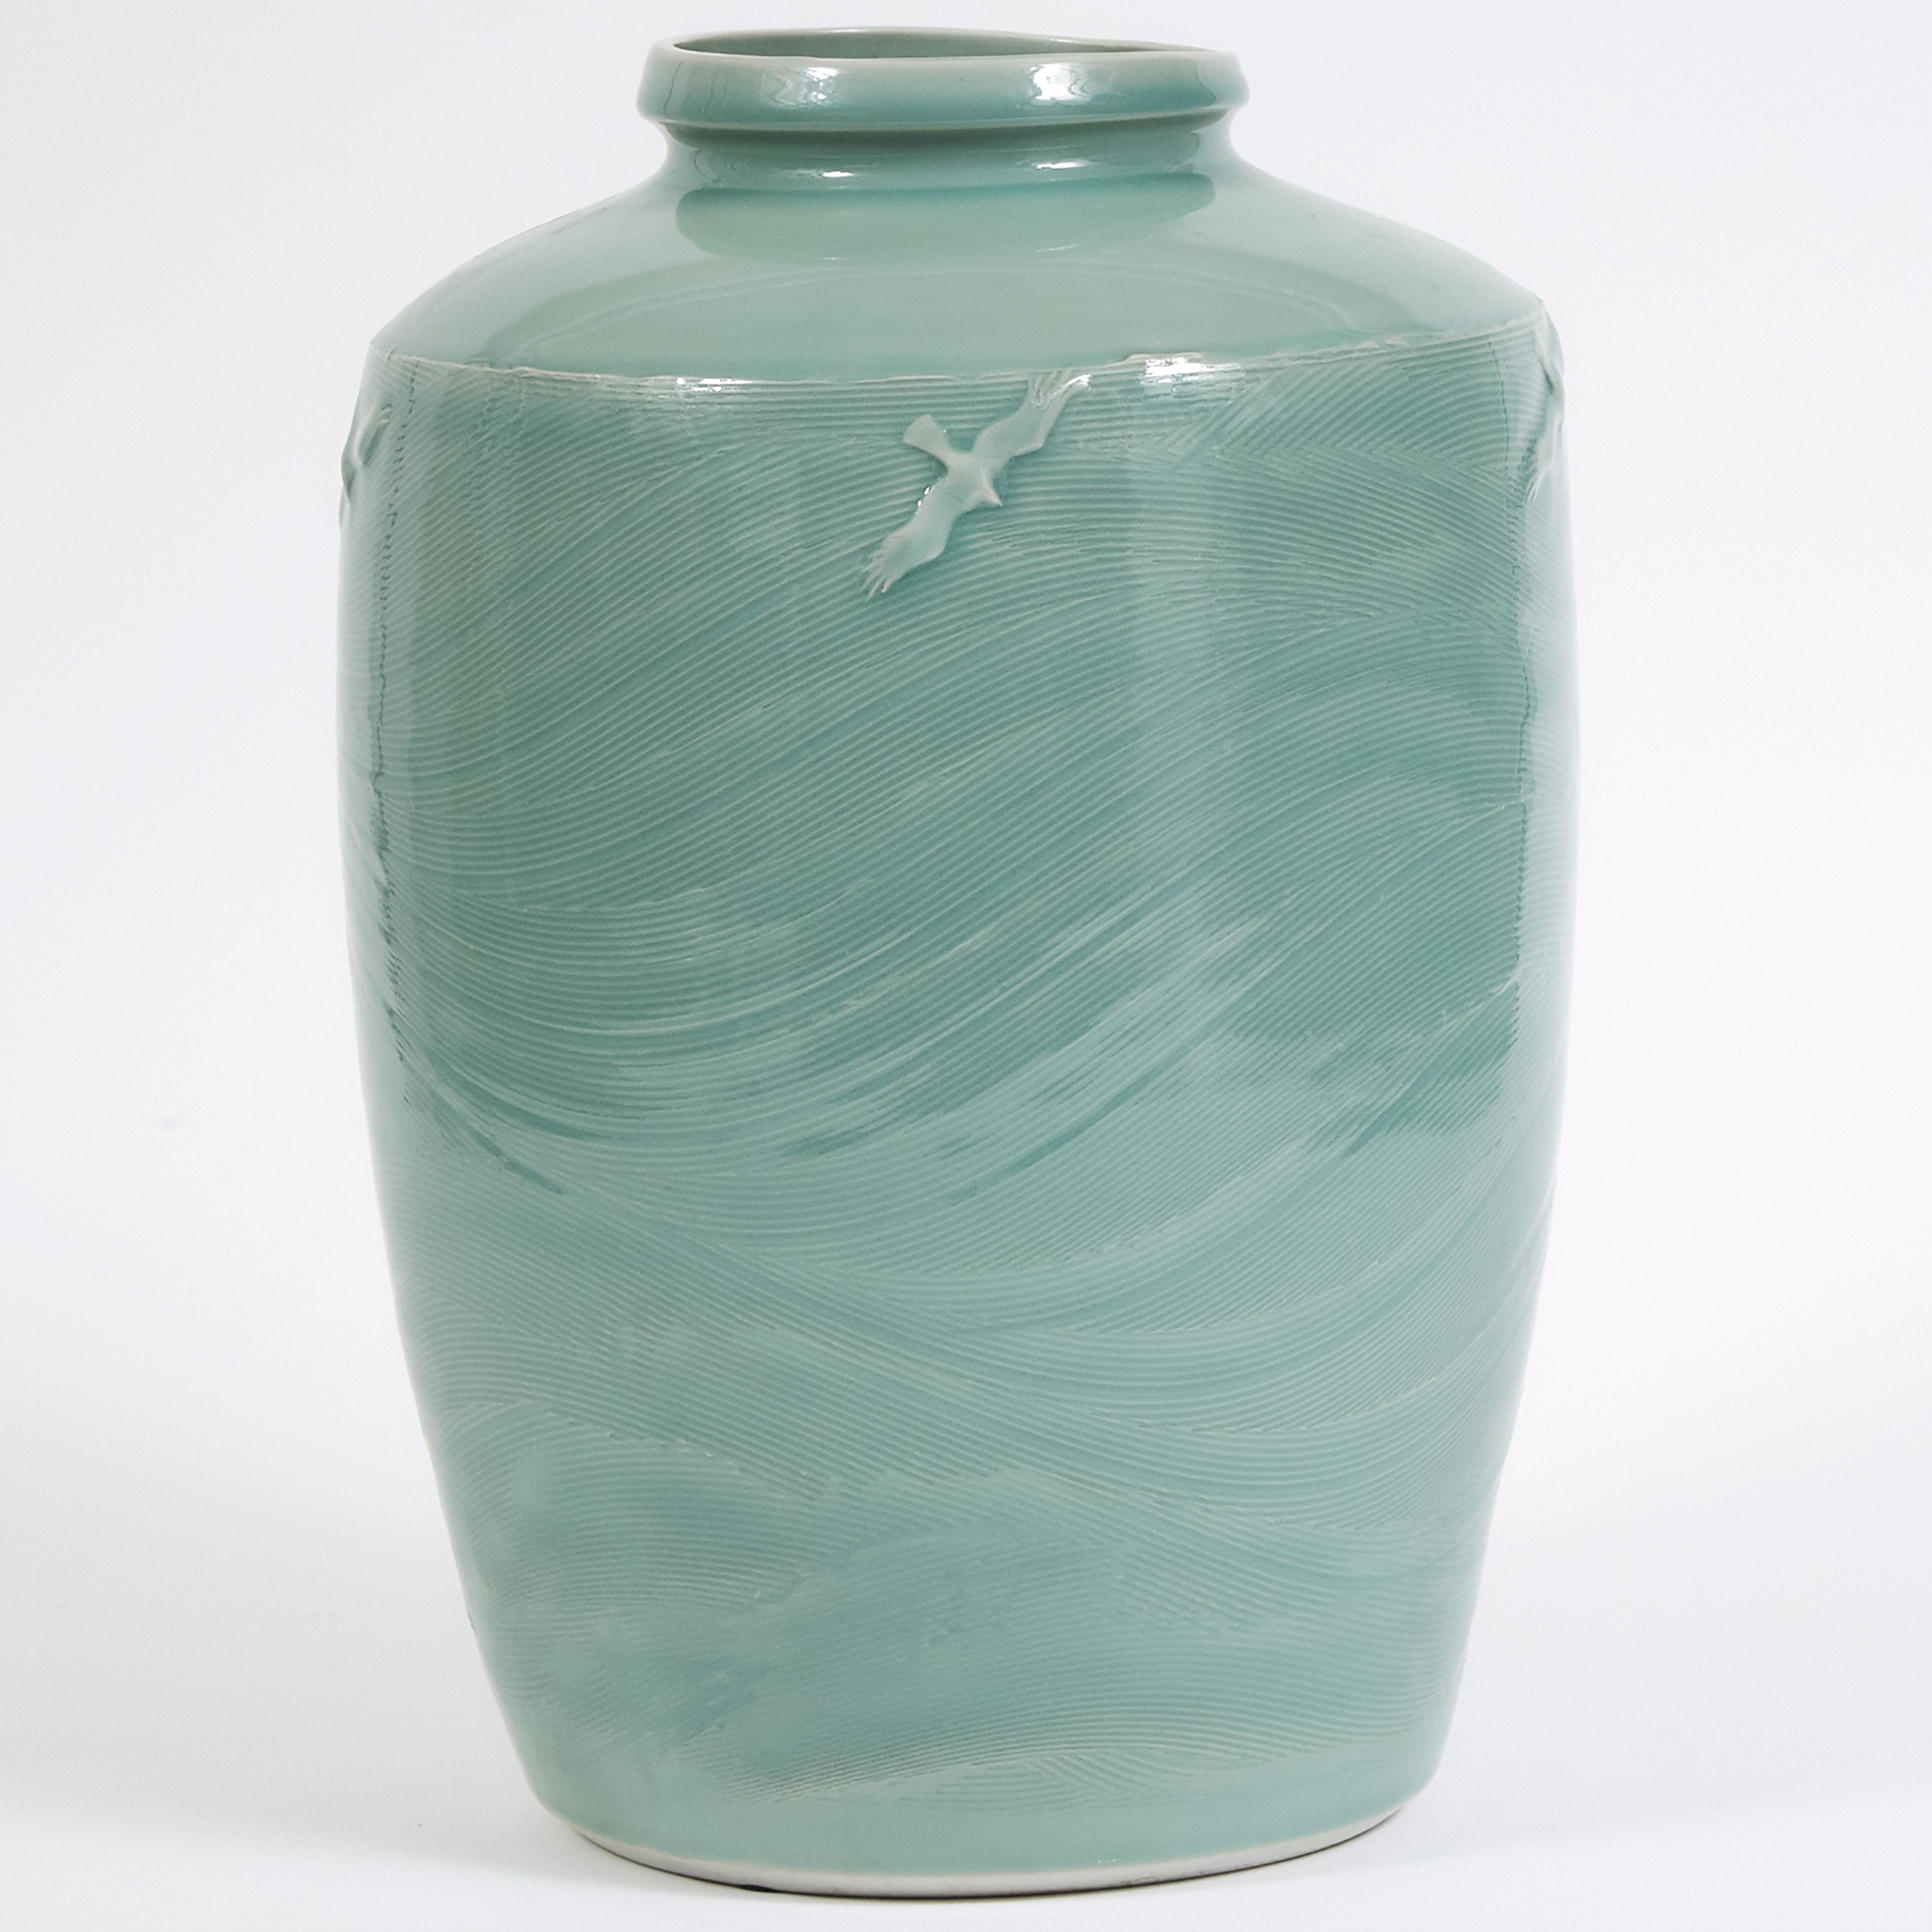 Harlan House (Canadian, b.1943), Large Moulded and Celadon Glazed Vase, 1988